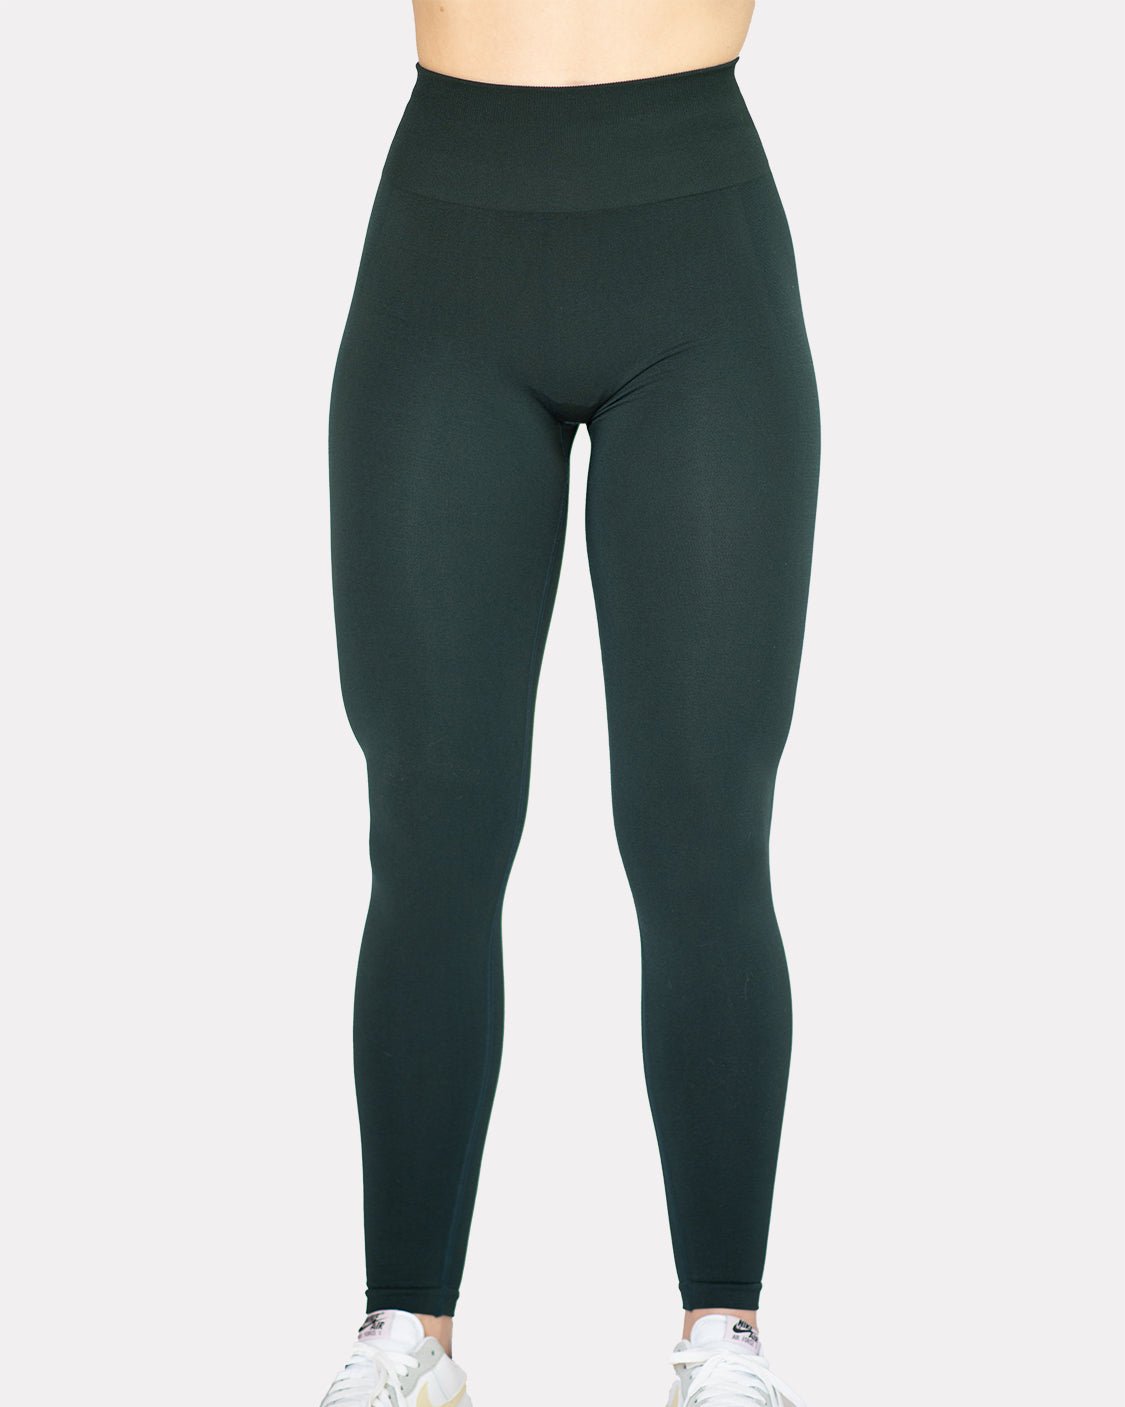 Aurola Scrunch Leggings - Xsmall Green Size XS - $20 (44% Off